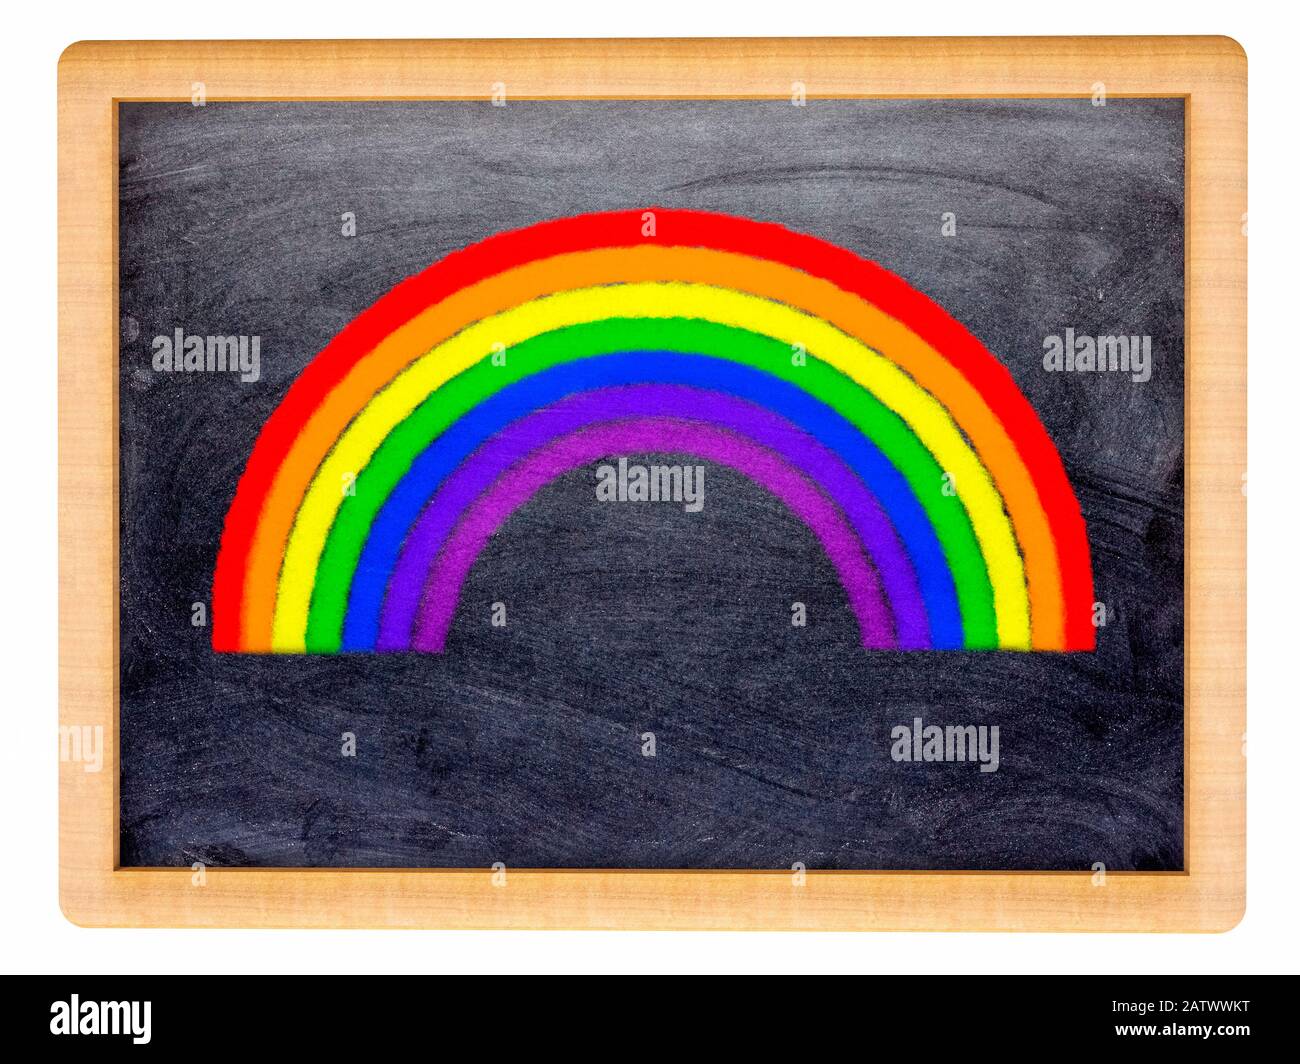 A multi coloured rainbow drawn on a small blackboard Stock Photo